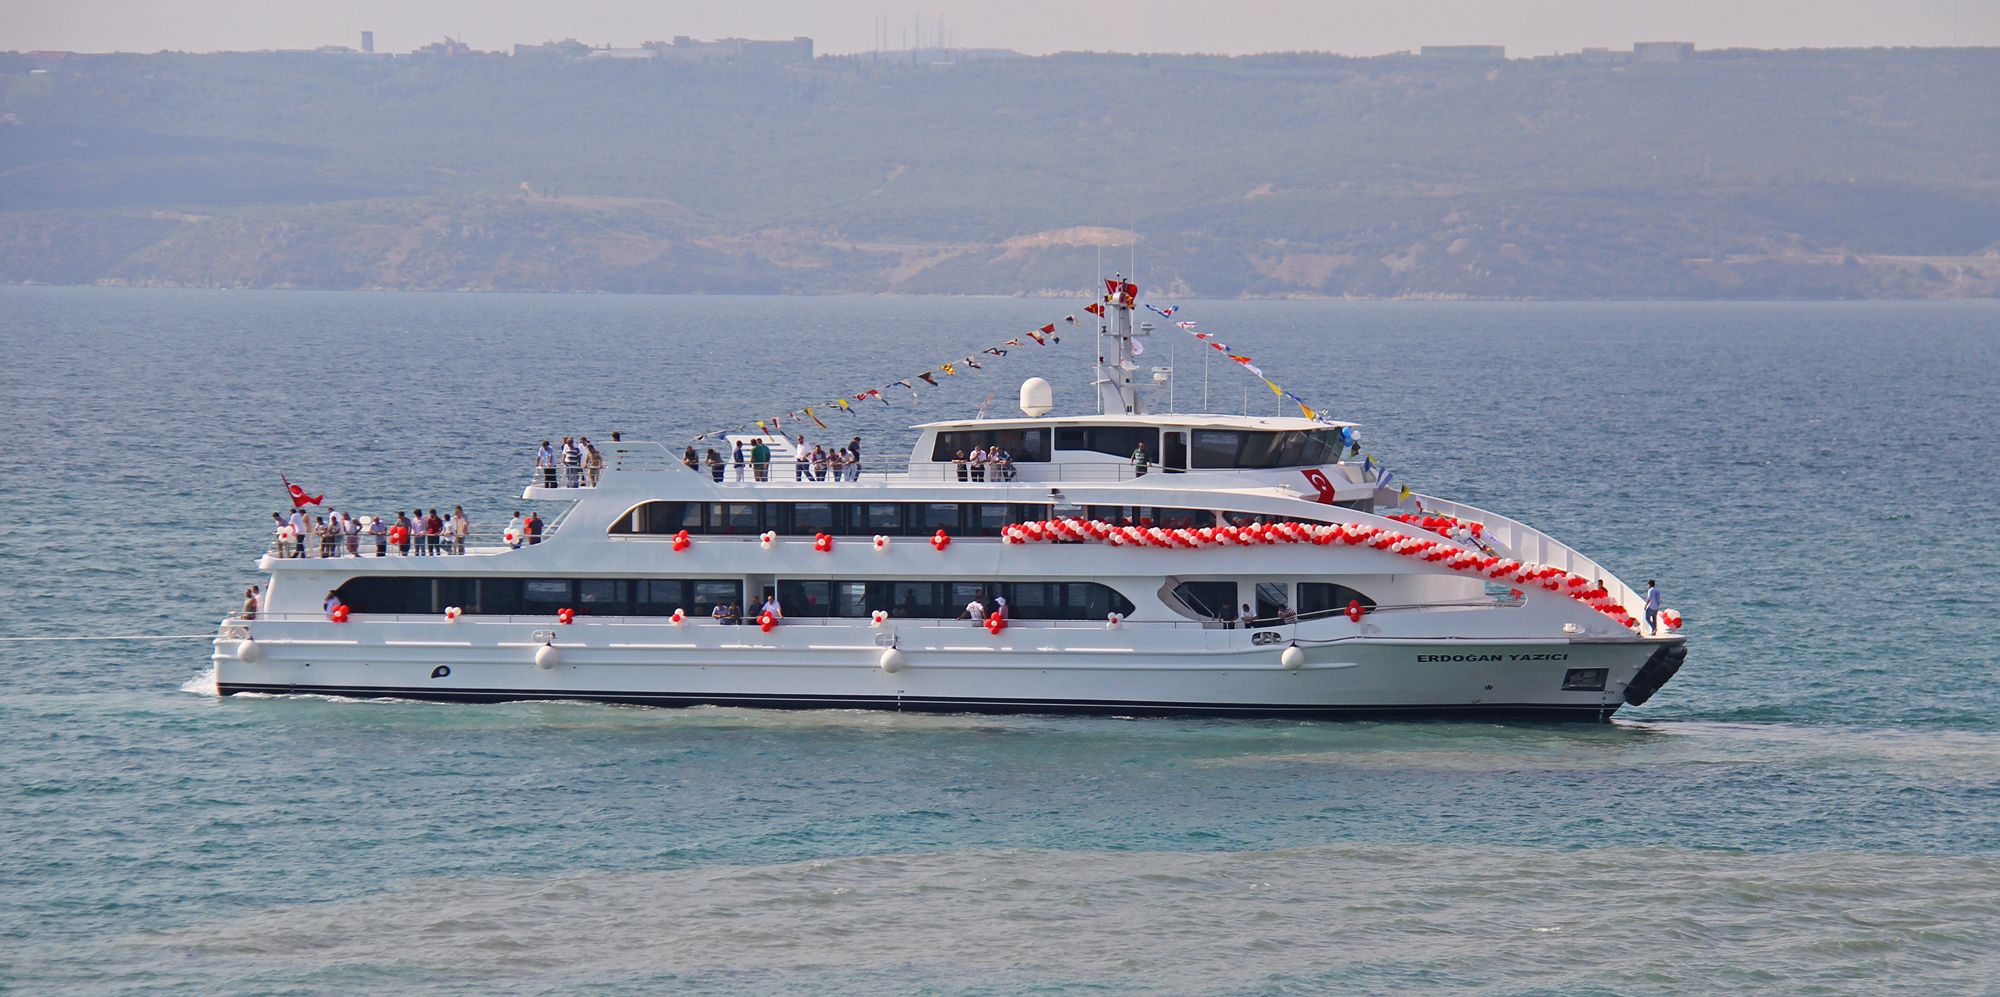 Özata Shipyard Build | Erdoğan YAZICI with a capacity of 1000 passengers is launched